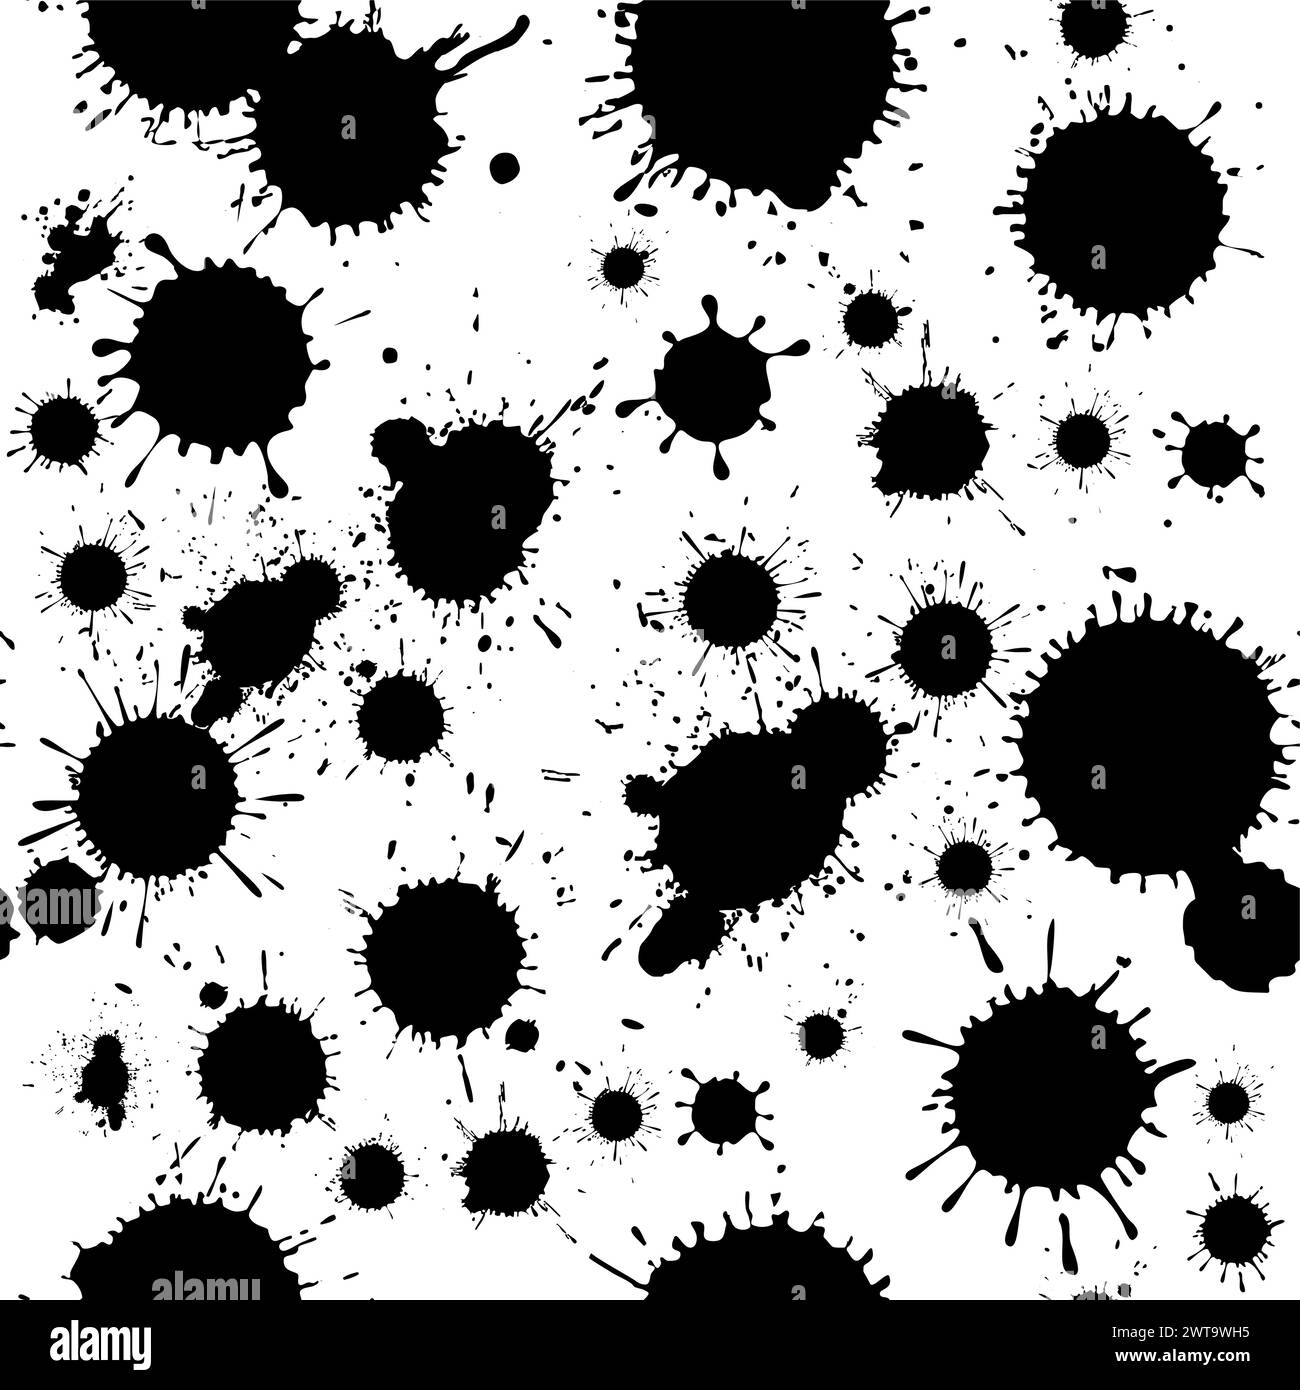 Black ink splatter seamless pattern. Artistic grunge Stock Vector